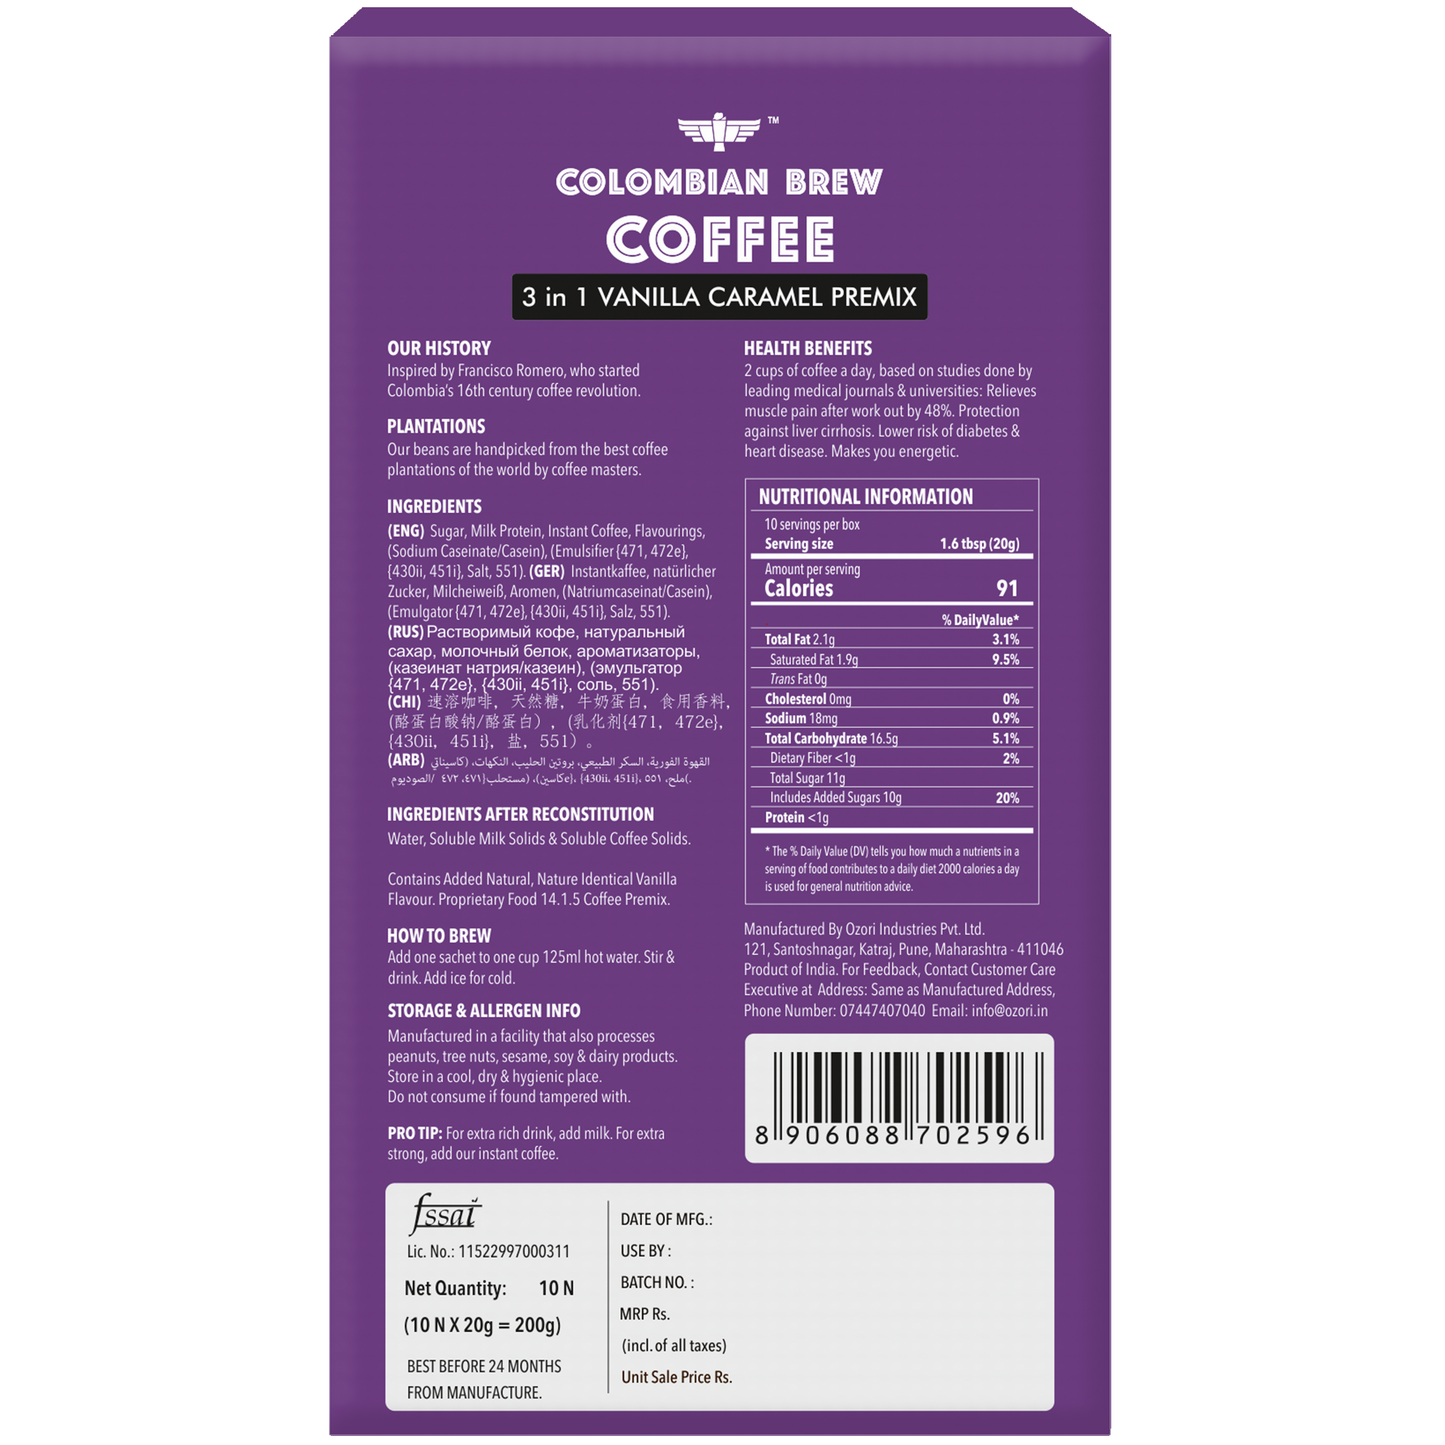 Vanilla Caramel Café Latte, Instant Coffee Powder Premix (3 in 1), 10 Sachets Box 